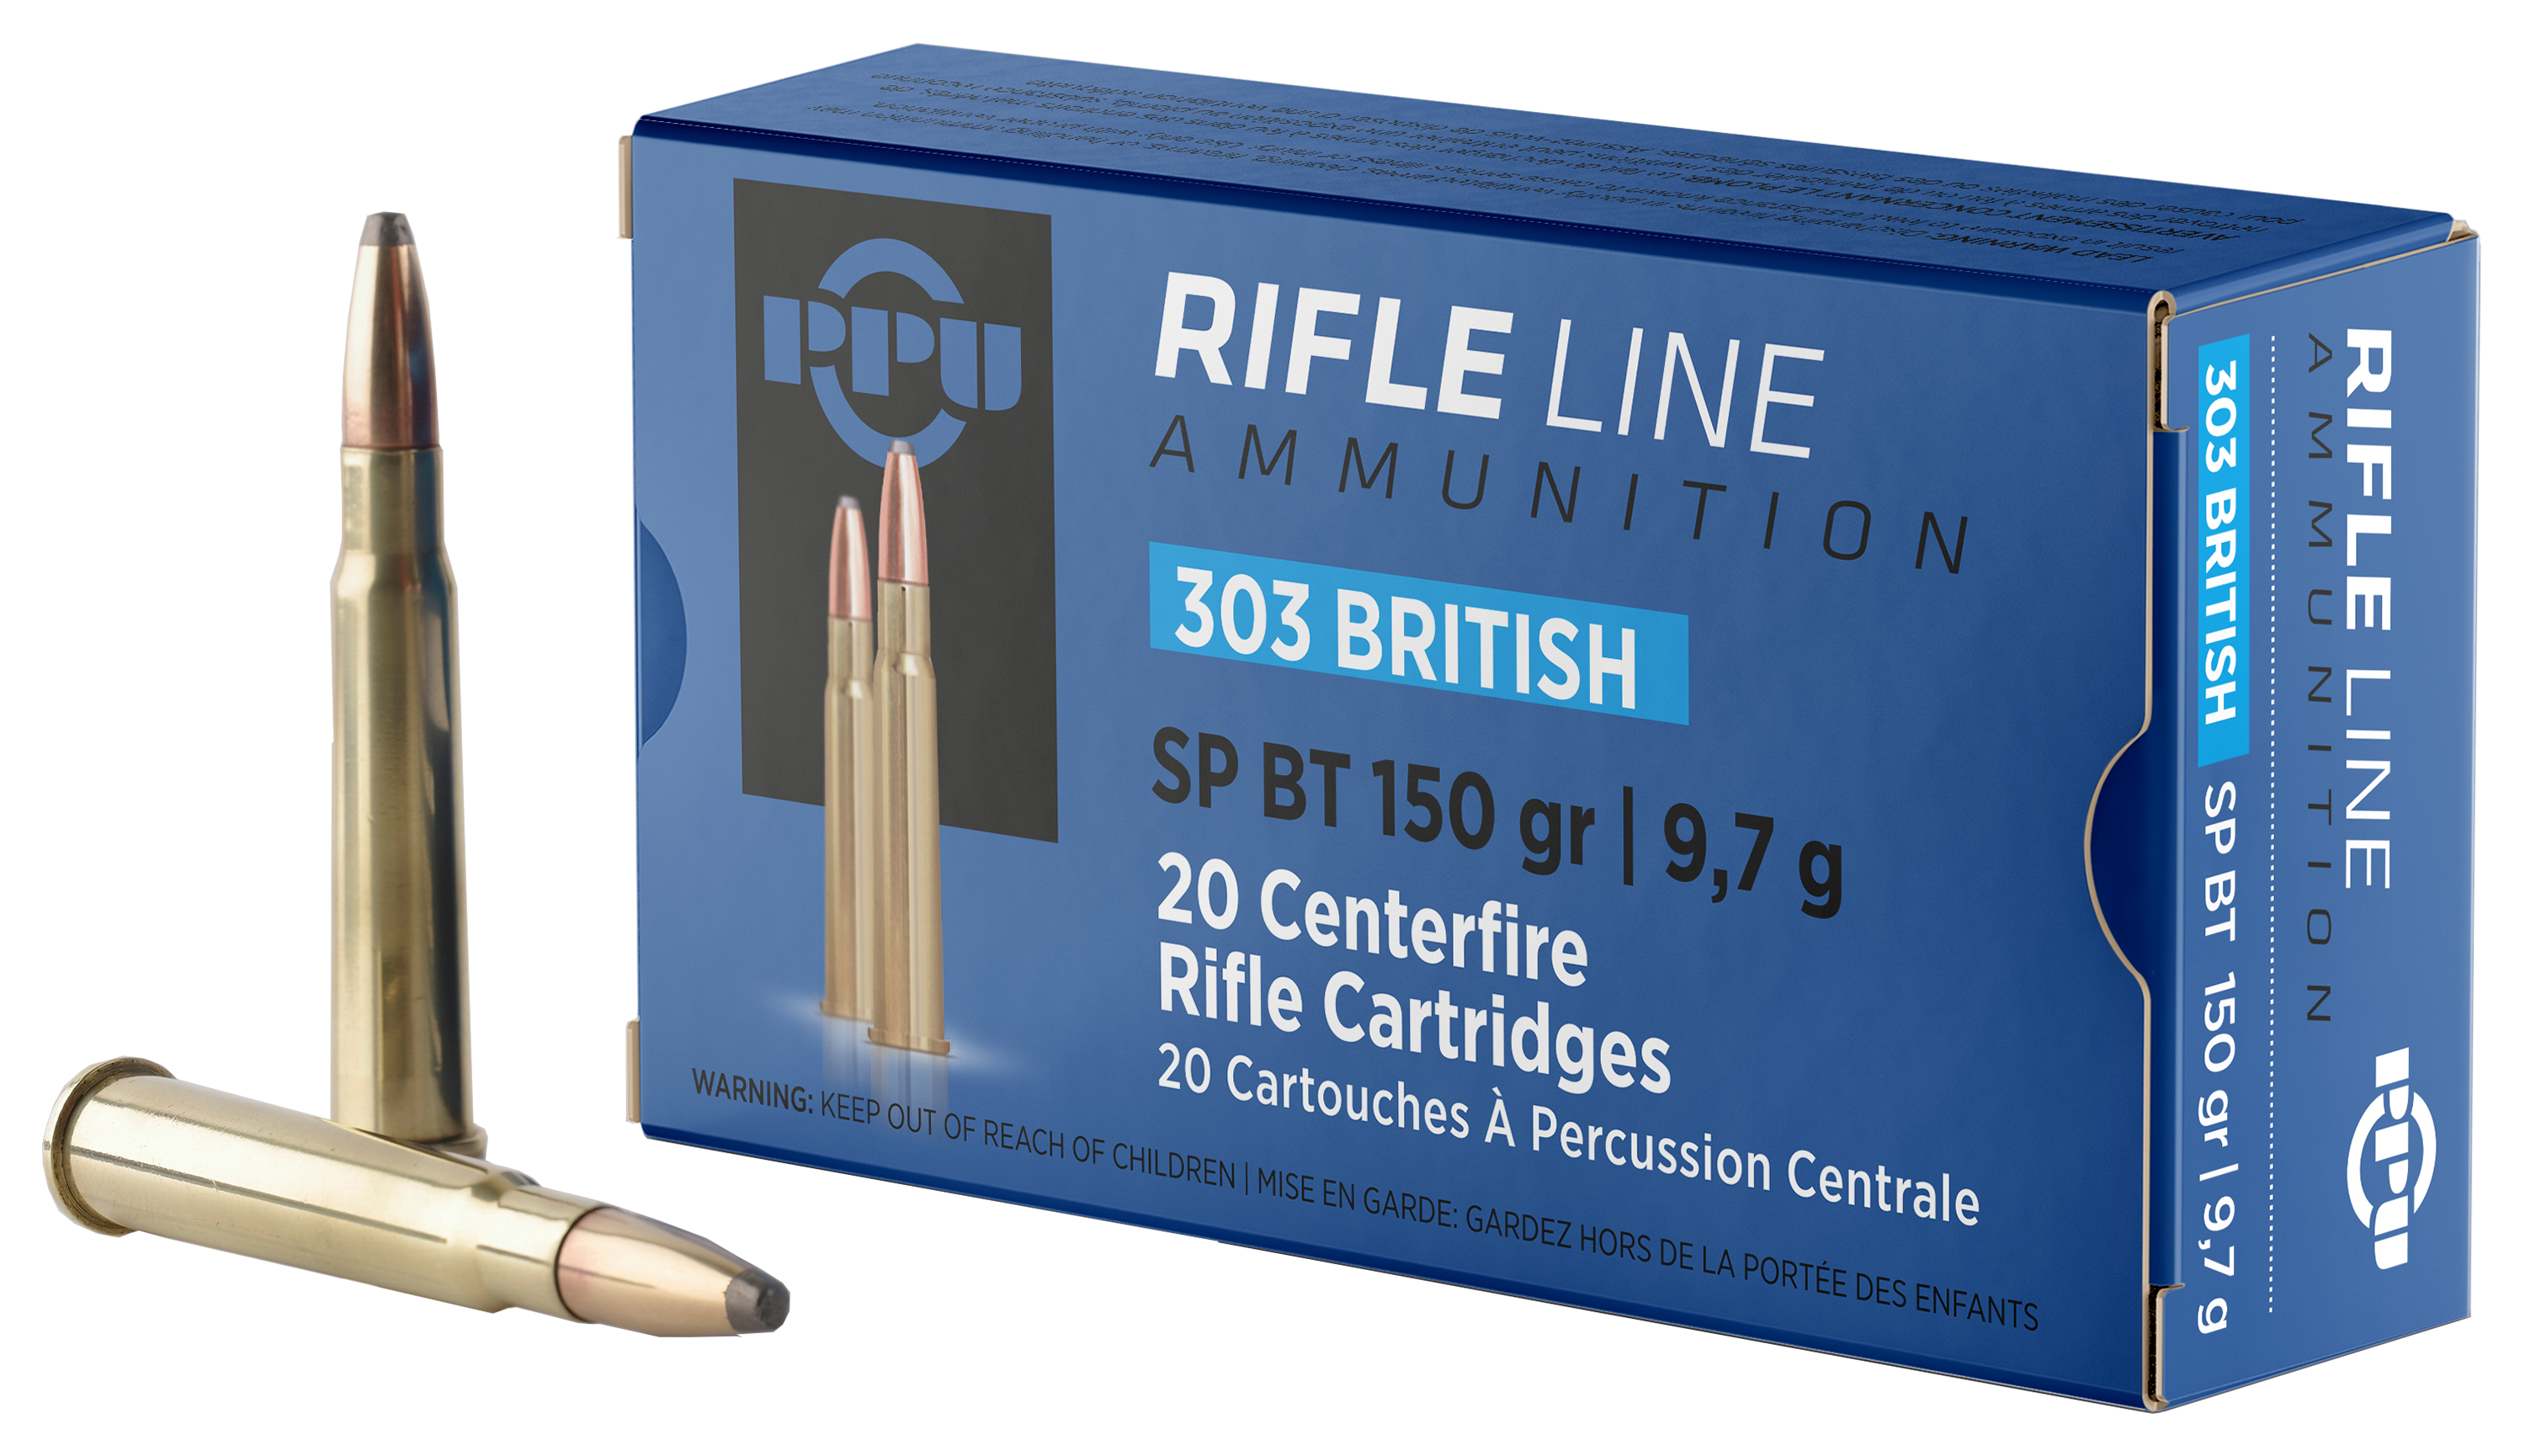 PPU SPBT .303 British 150 Grain Centerfire Rifle Ammo